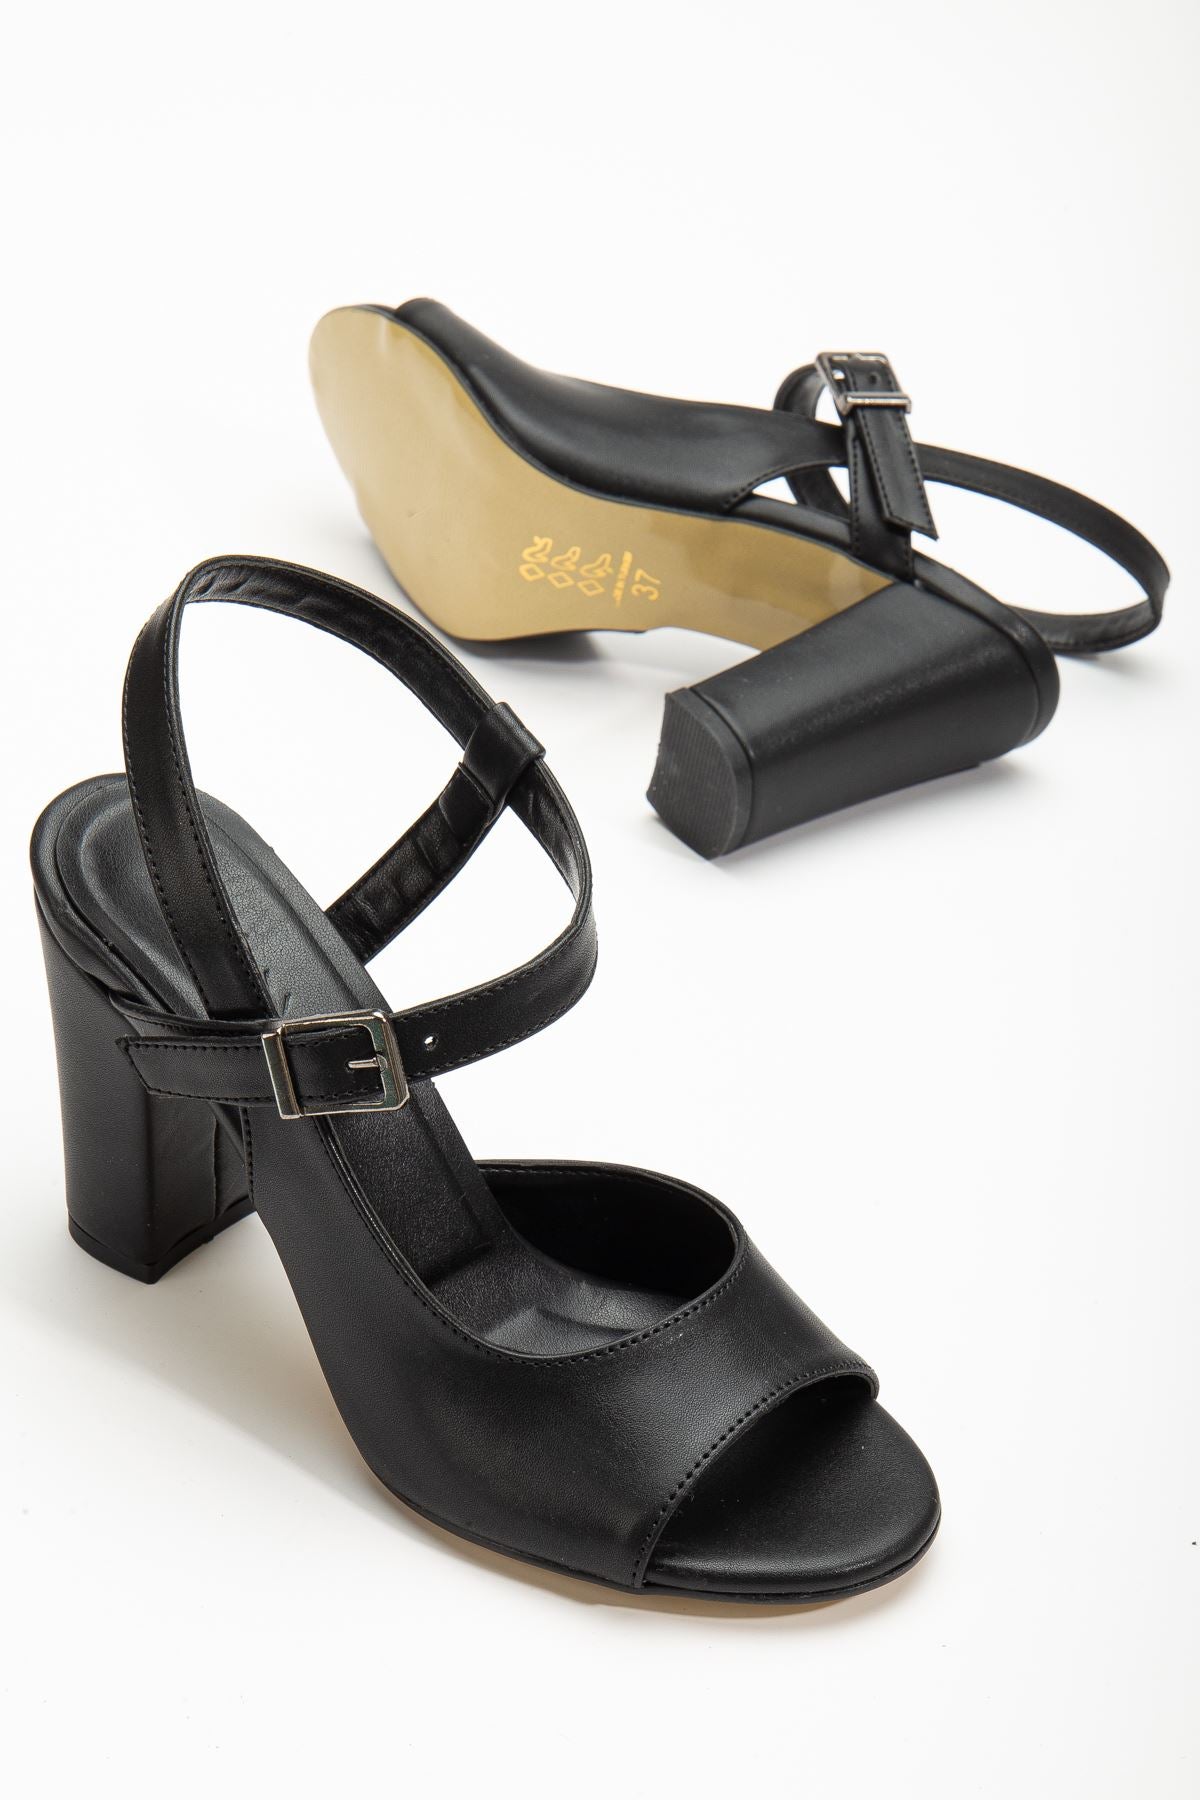 Lovisa Heeled Black Skin Women's Shoes - STREETMODE ™